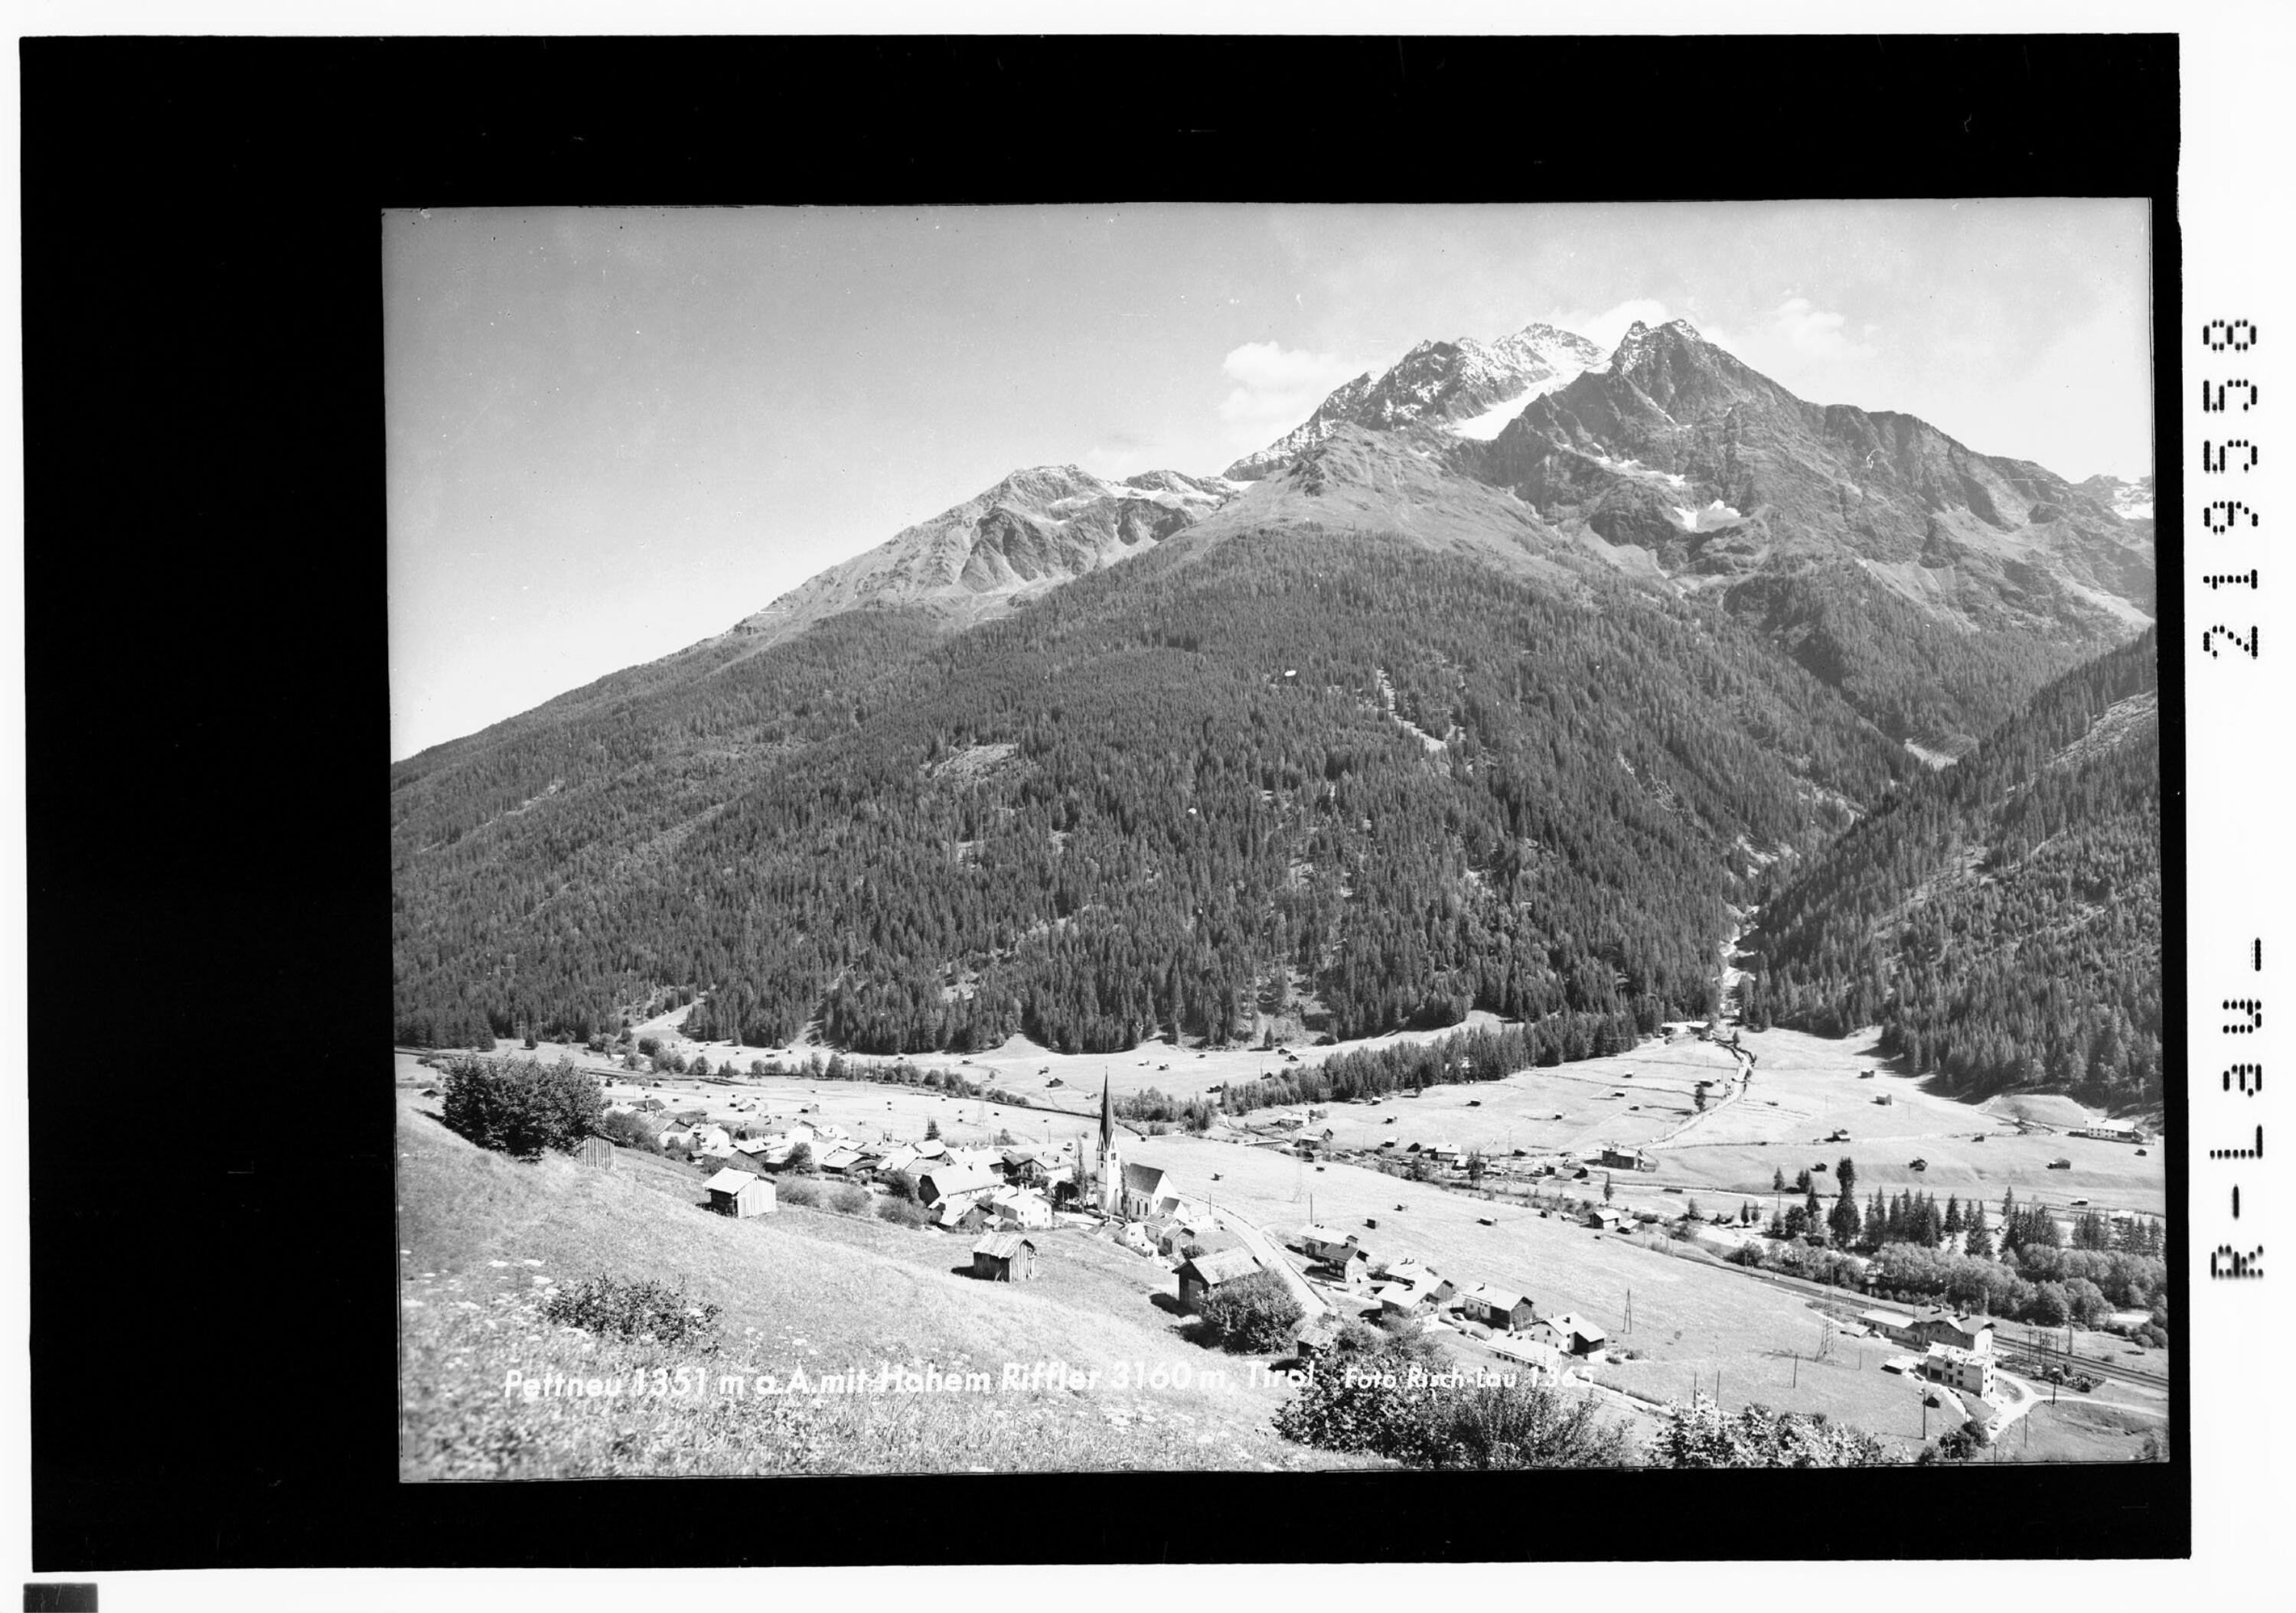 Pettneu 1351 m am Arlberg mit Hohem Riffler 3160 m, Tirol></div>


    <hr>
    <div class=